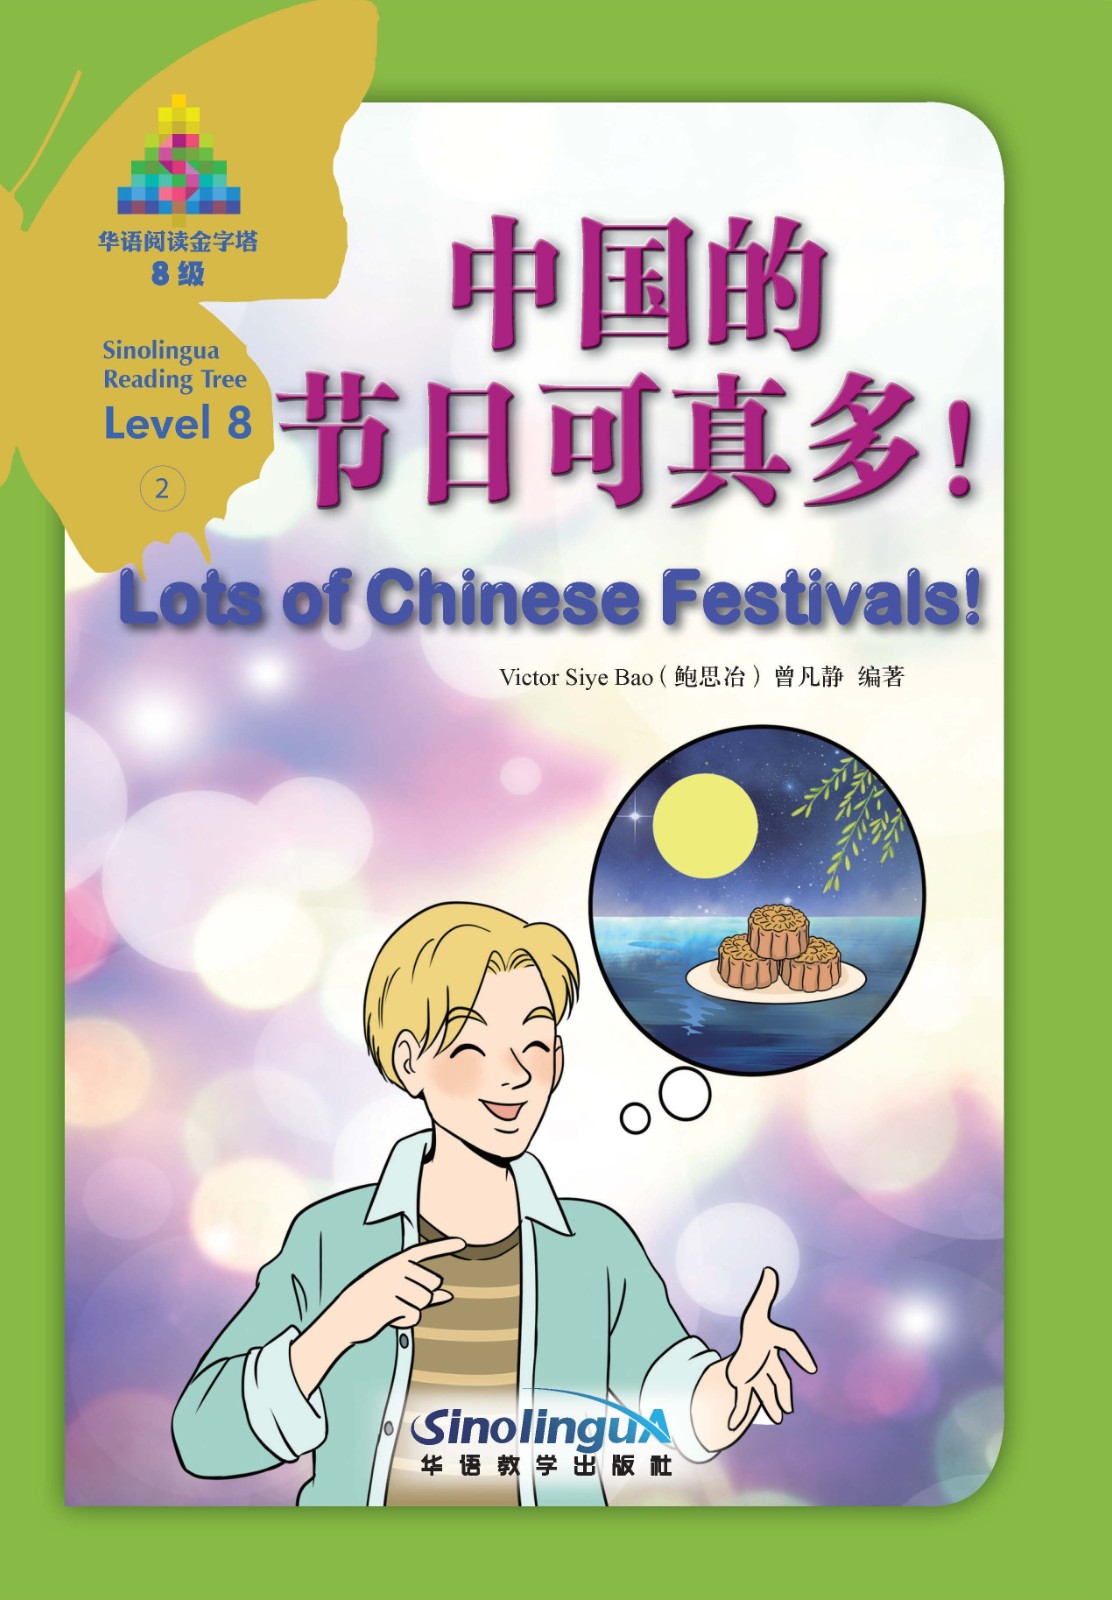 Sinolingua Reading Tree Level 8·2.Lots of Chinese Festivals!